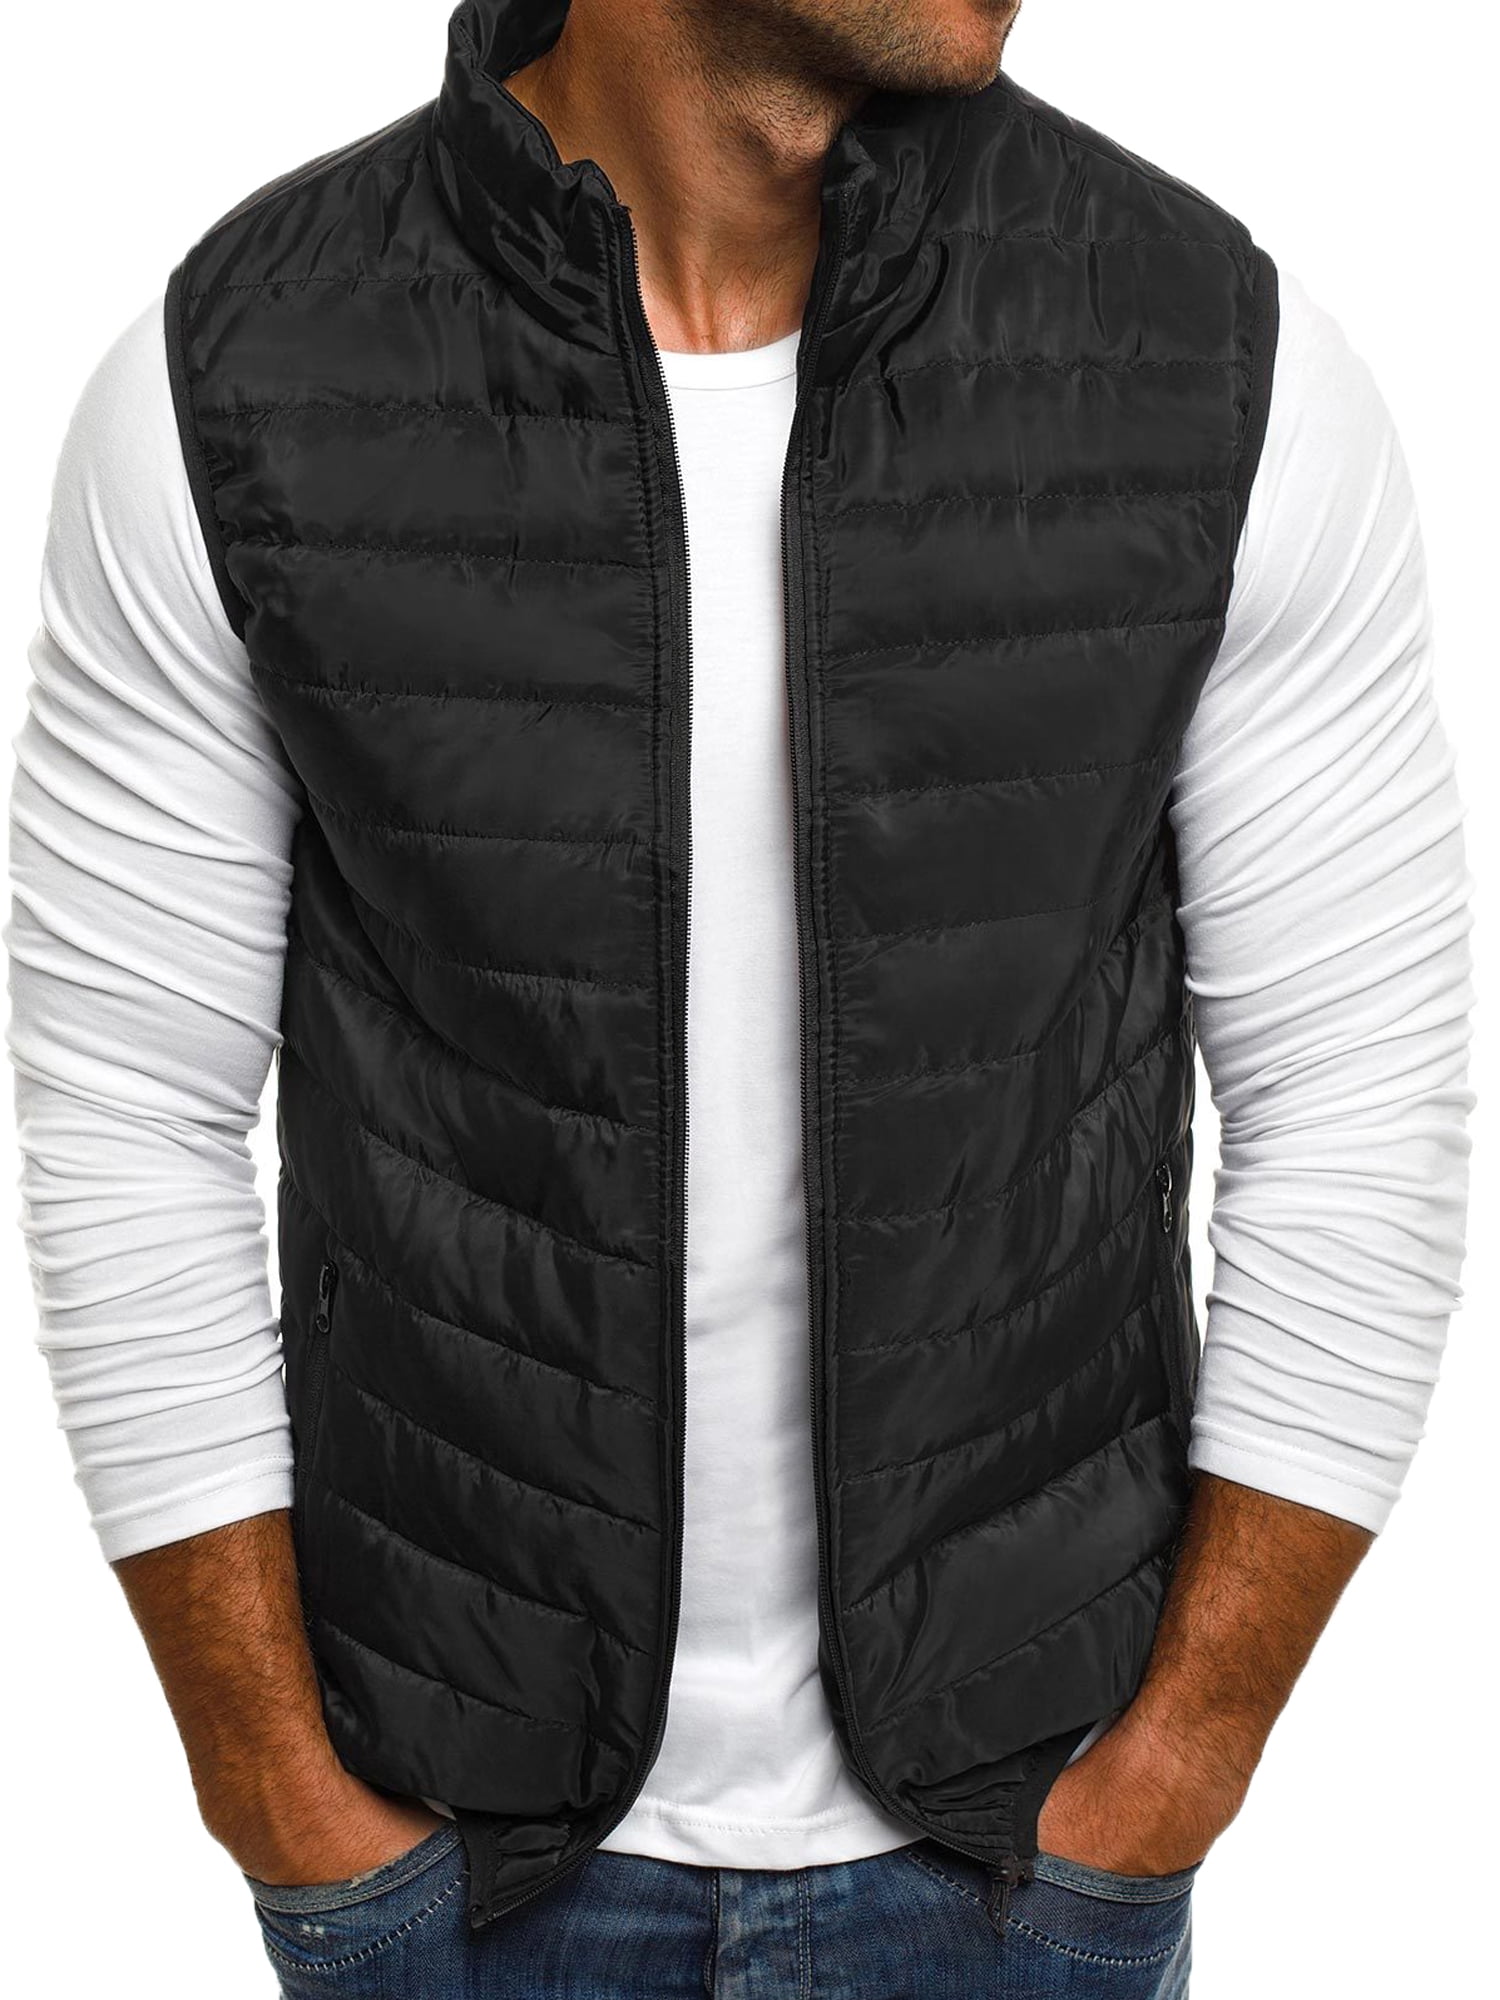 Beautyfine Thin Section Down Jacket Cotton Vest Men Autum Winter Solid Outwear Waistcoat Tops Blouse